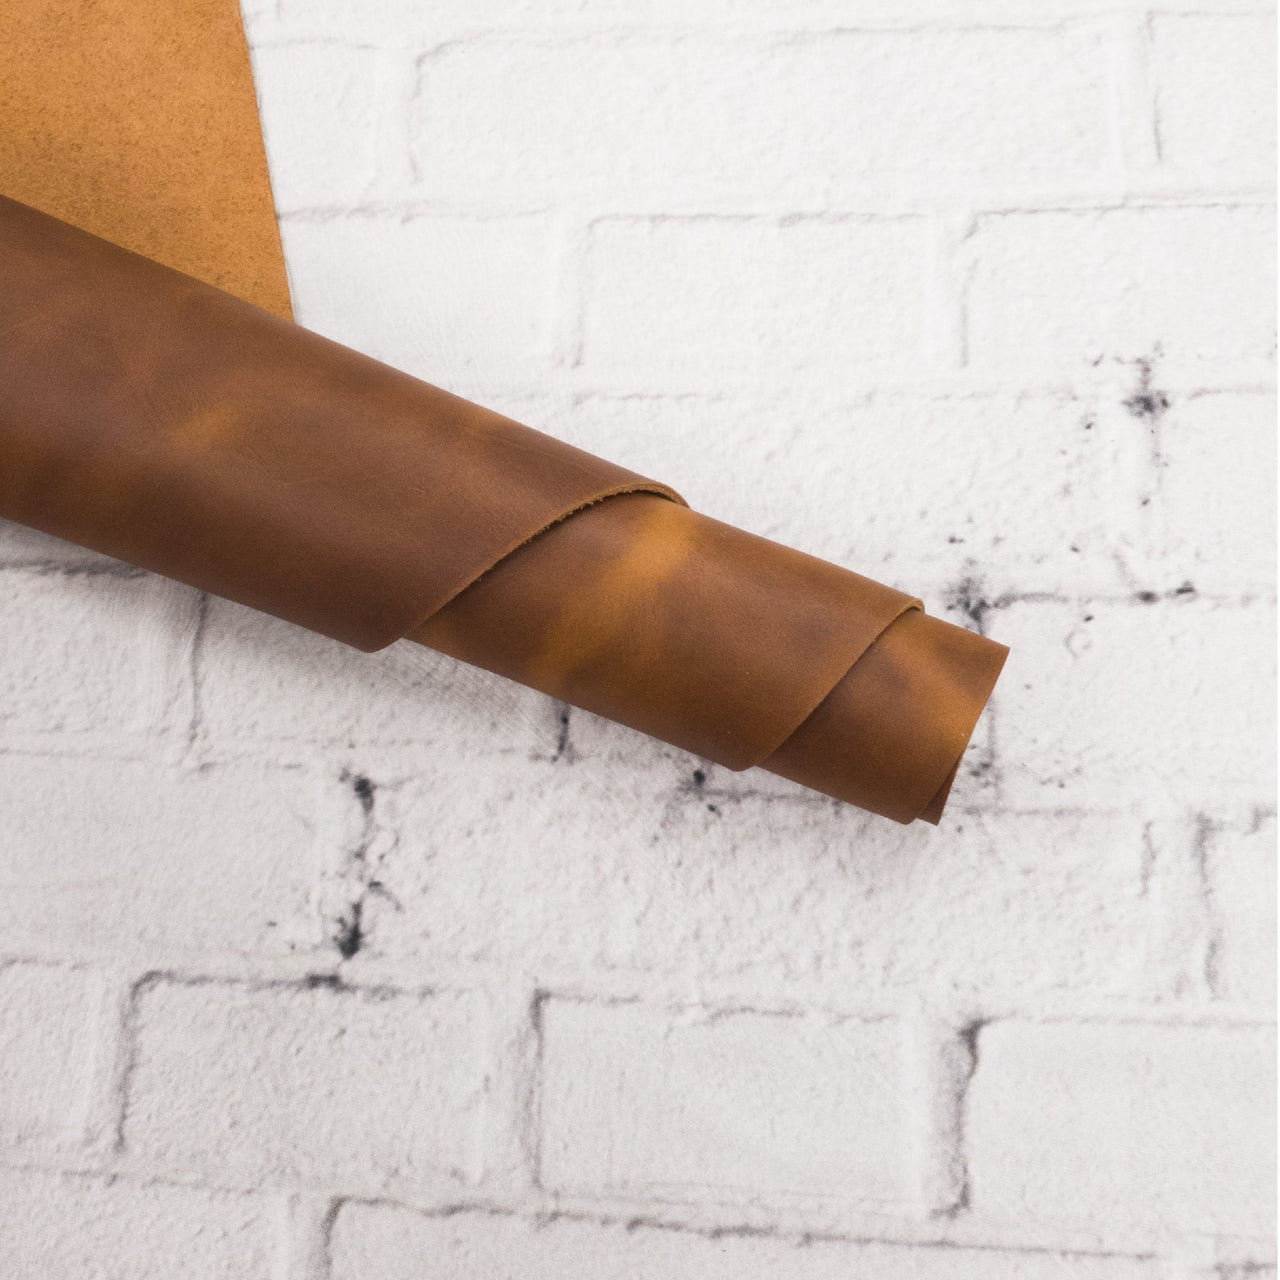 Leather Supplier / Leather Wholesaler / Buy Leather Hide / UK Based